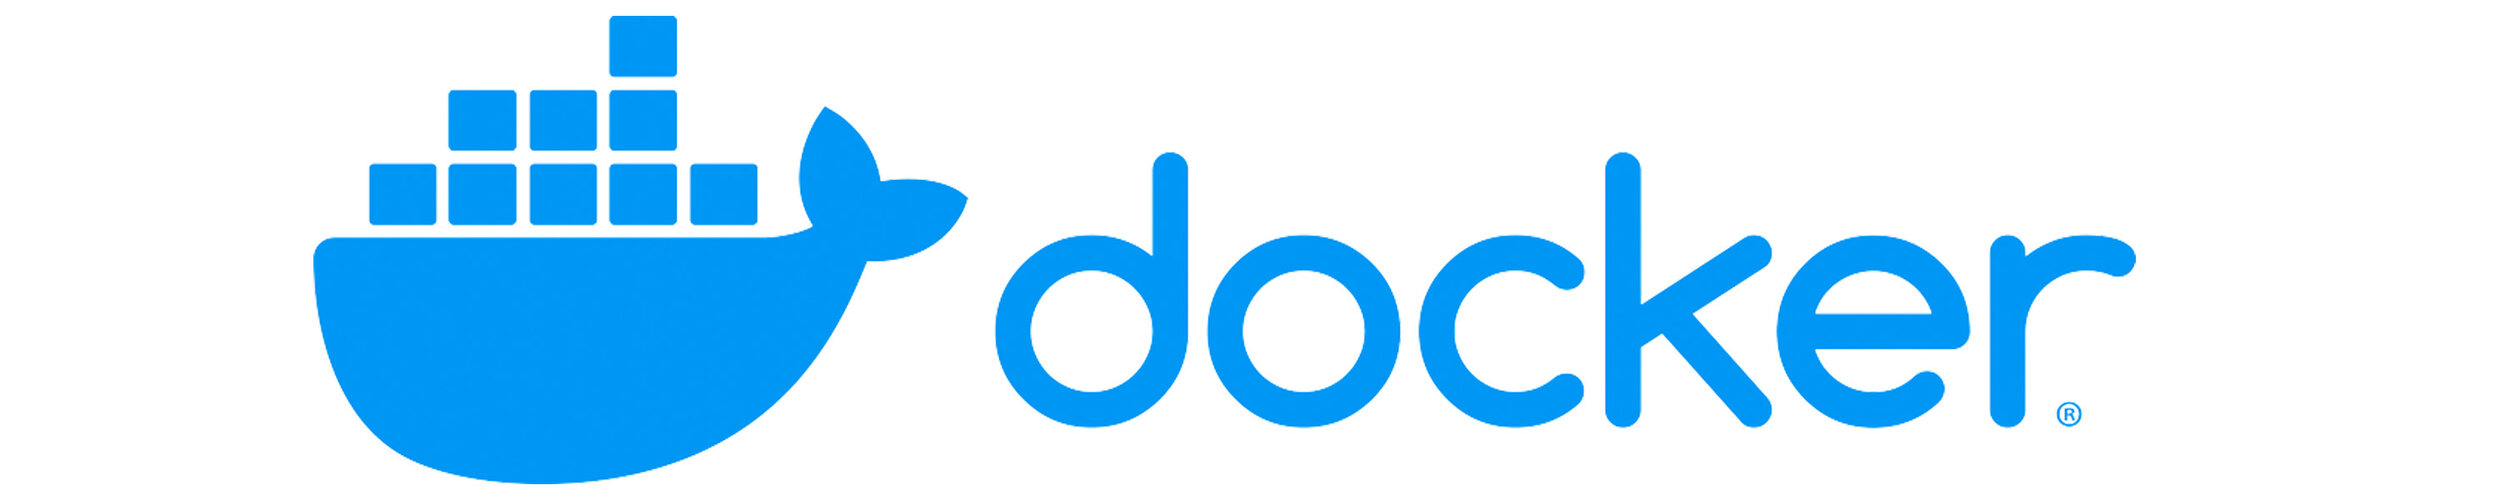 docker logo.jpg